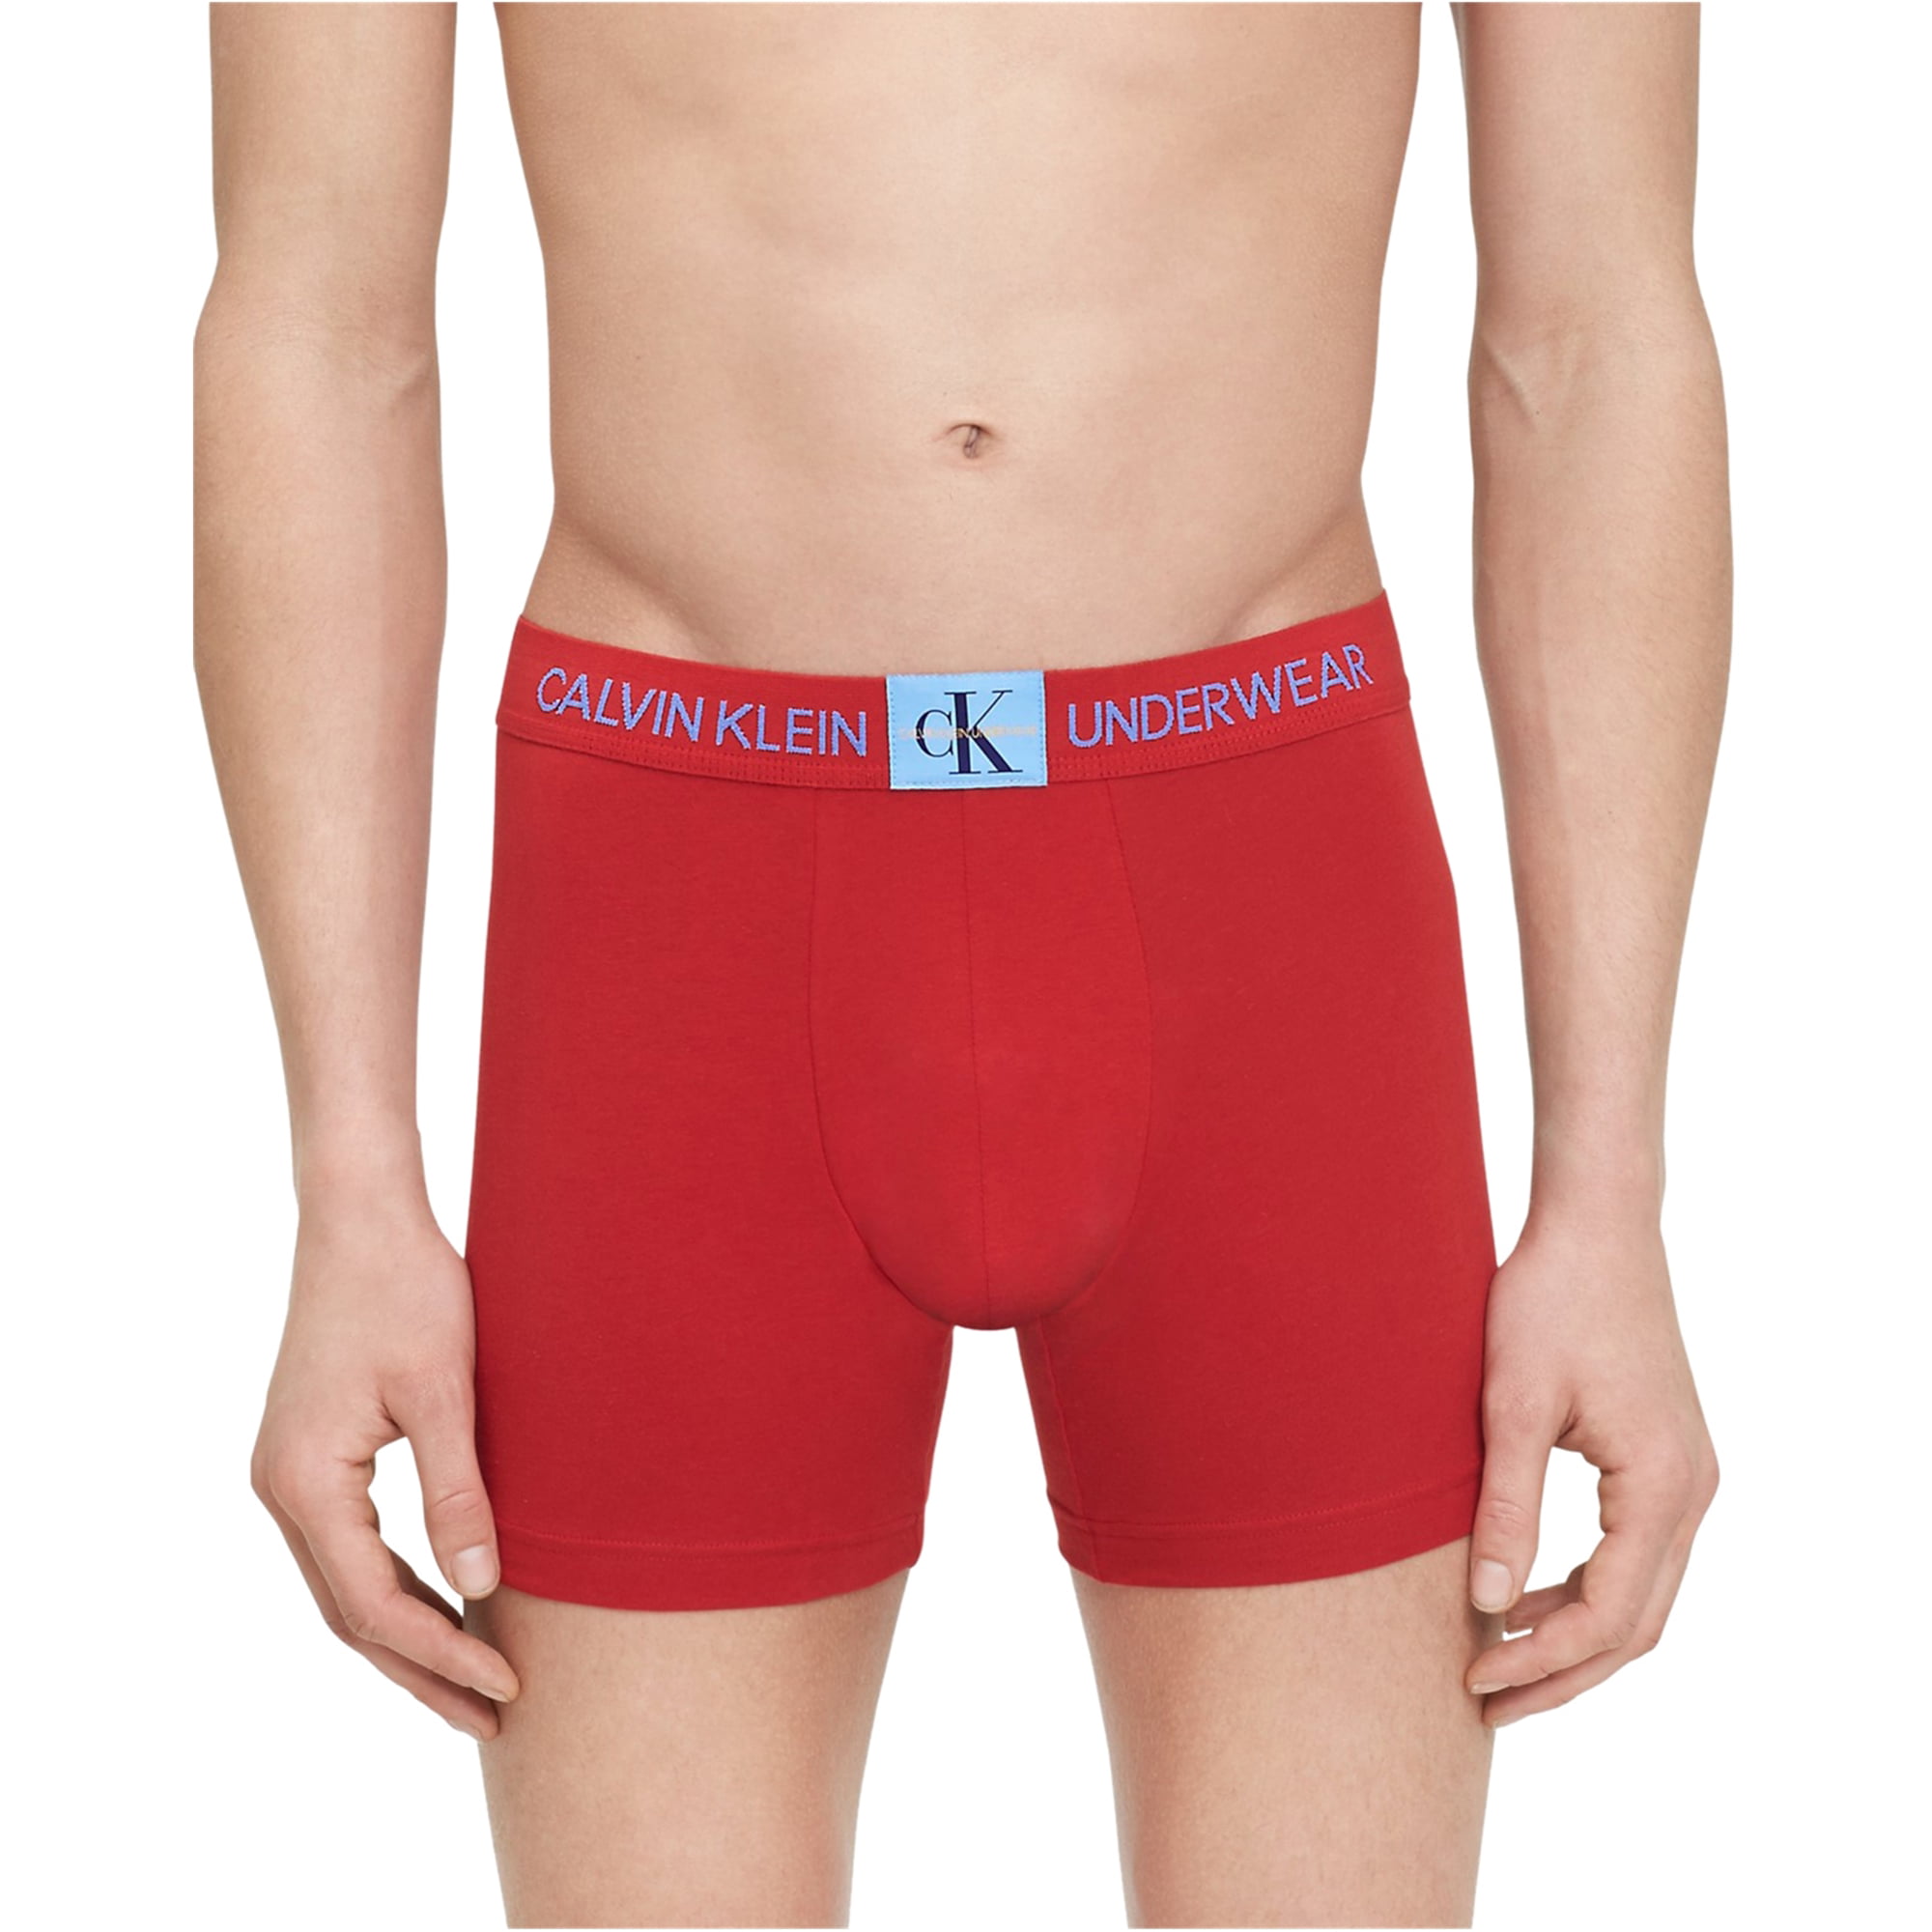 Vrijwillig Wild ik zal sterk zijn Calvin Klein Mens Classic Logo Underwear Boxer Briefs - Walmart.com